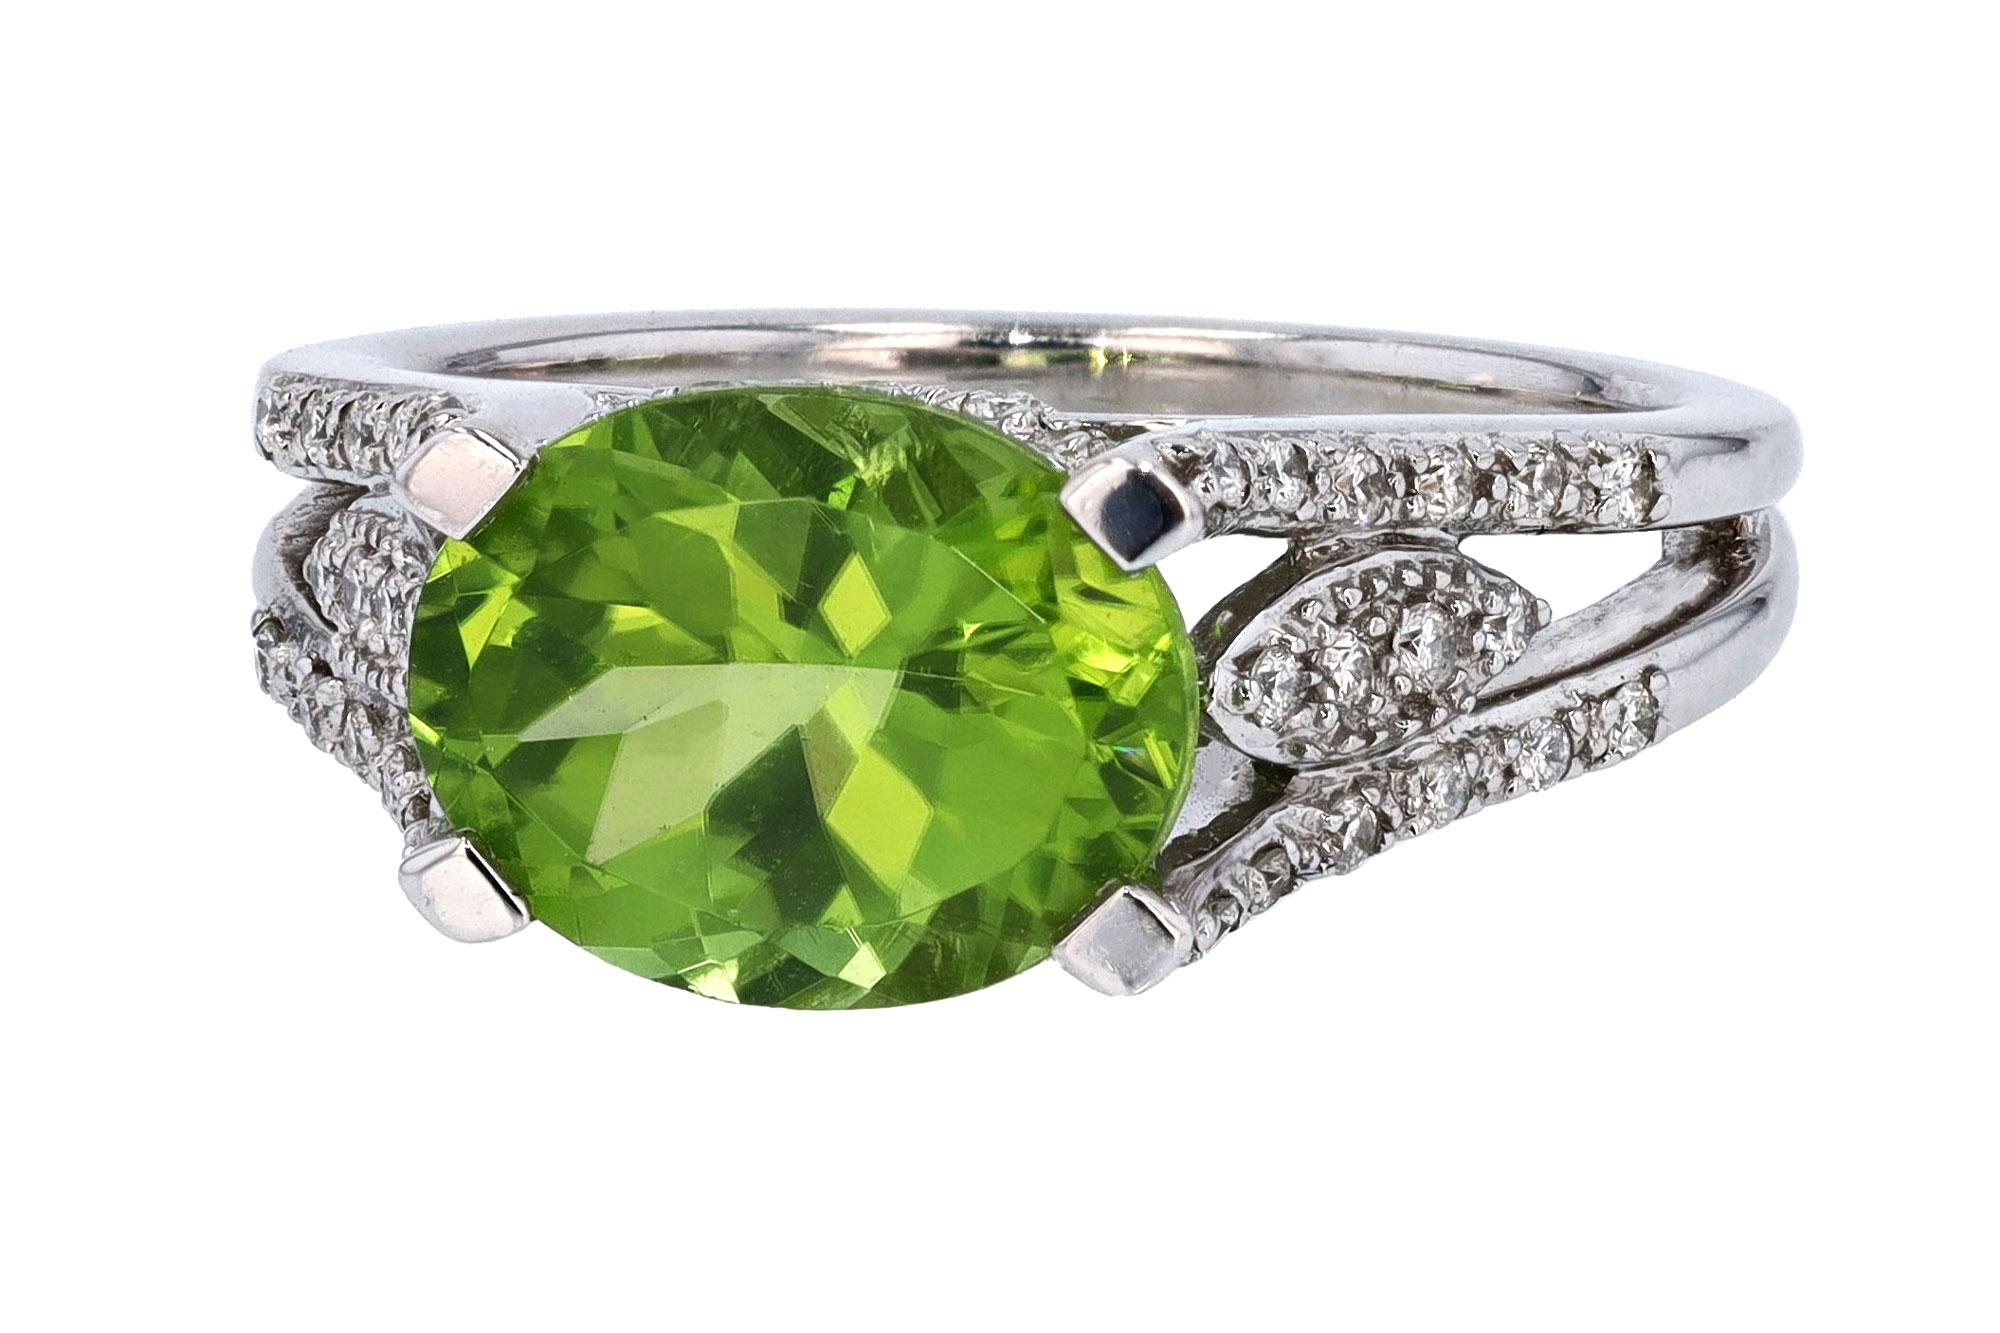 Oval Cut 3 Carat Peridot Gemstone Engagement Ring